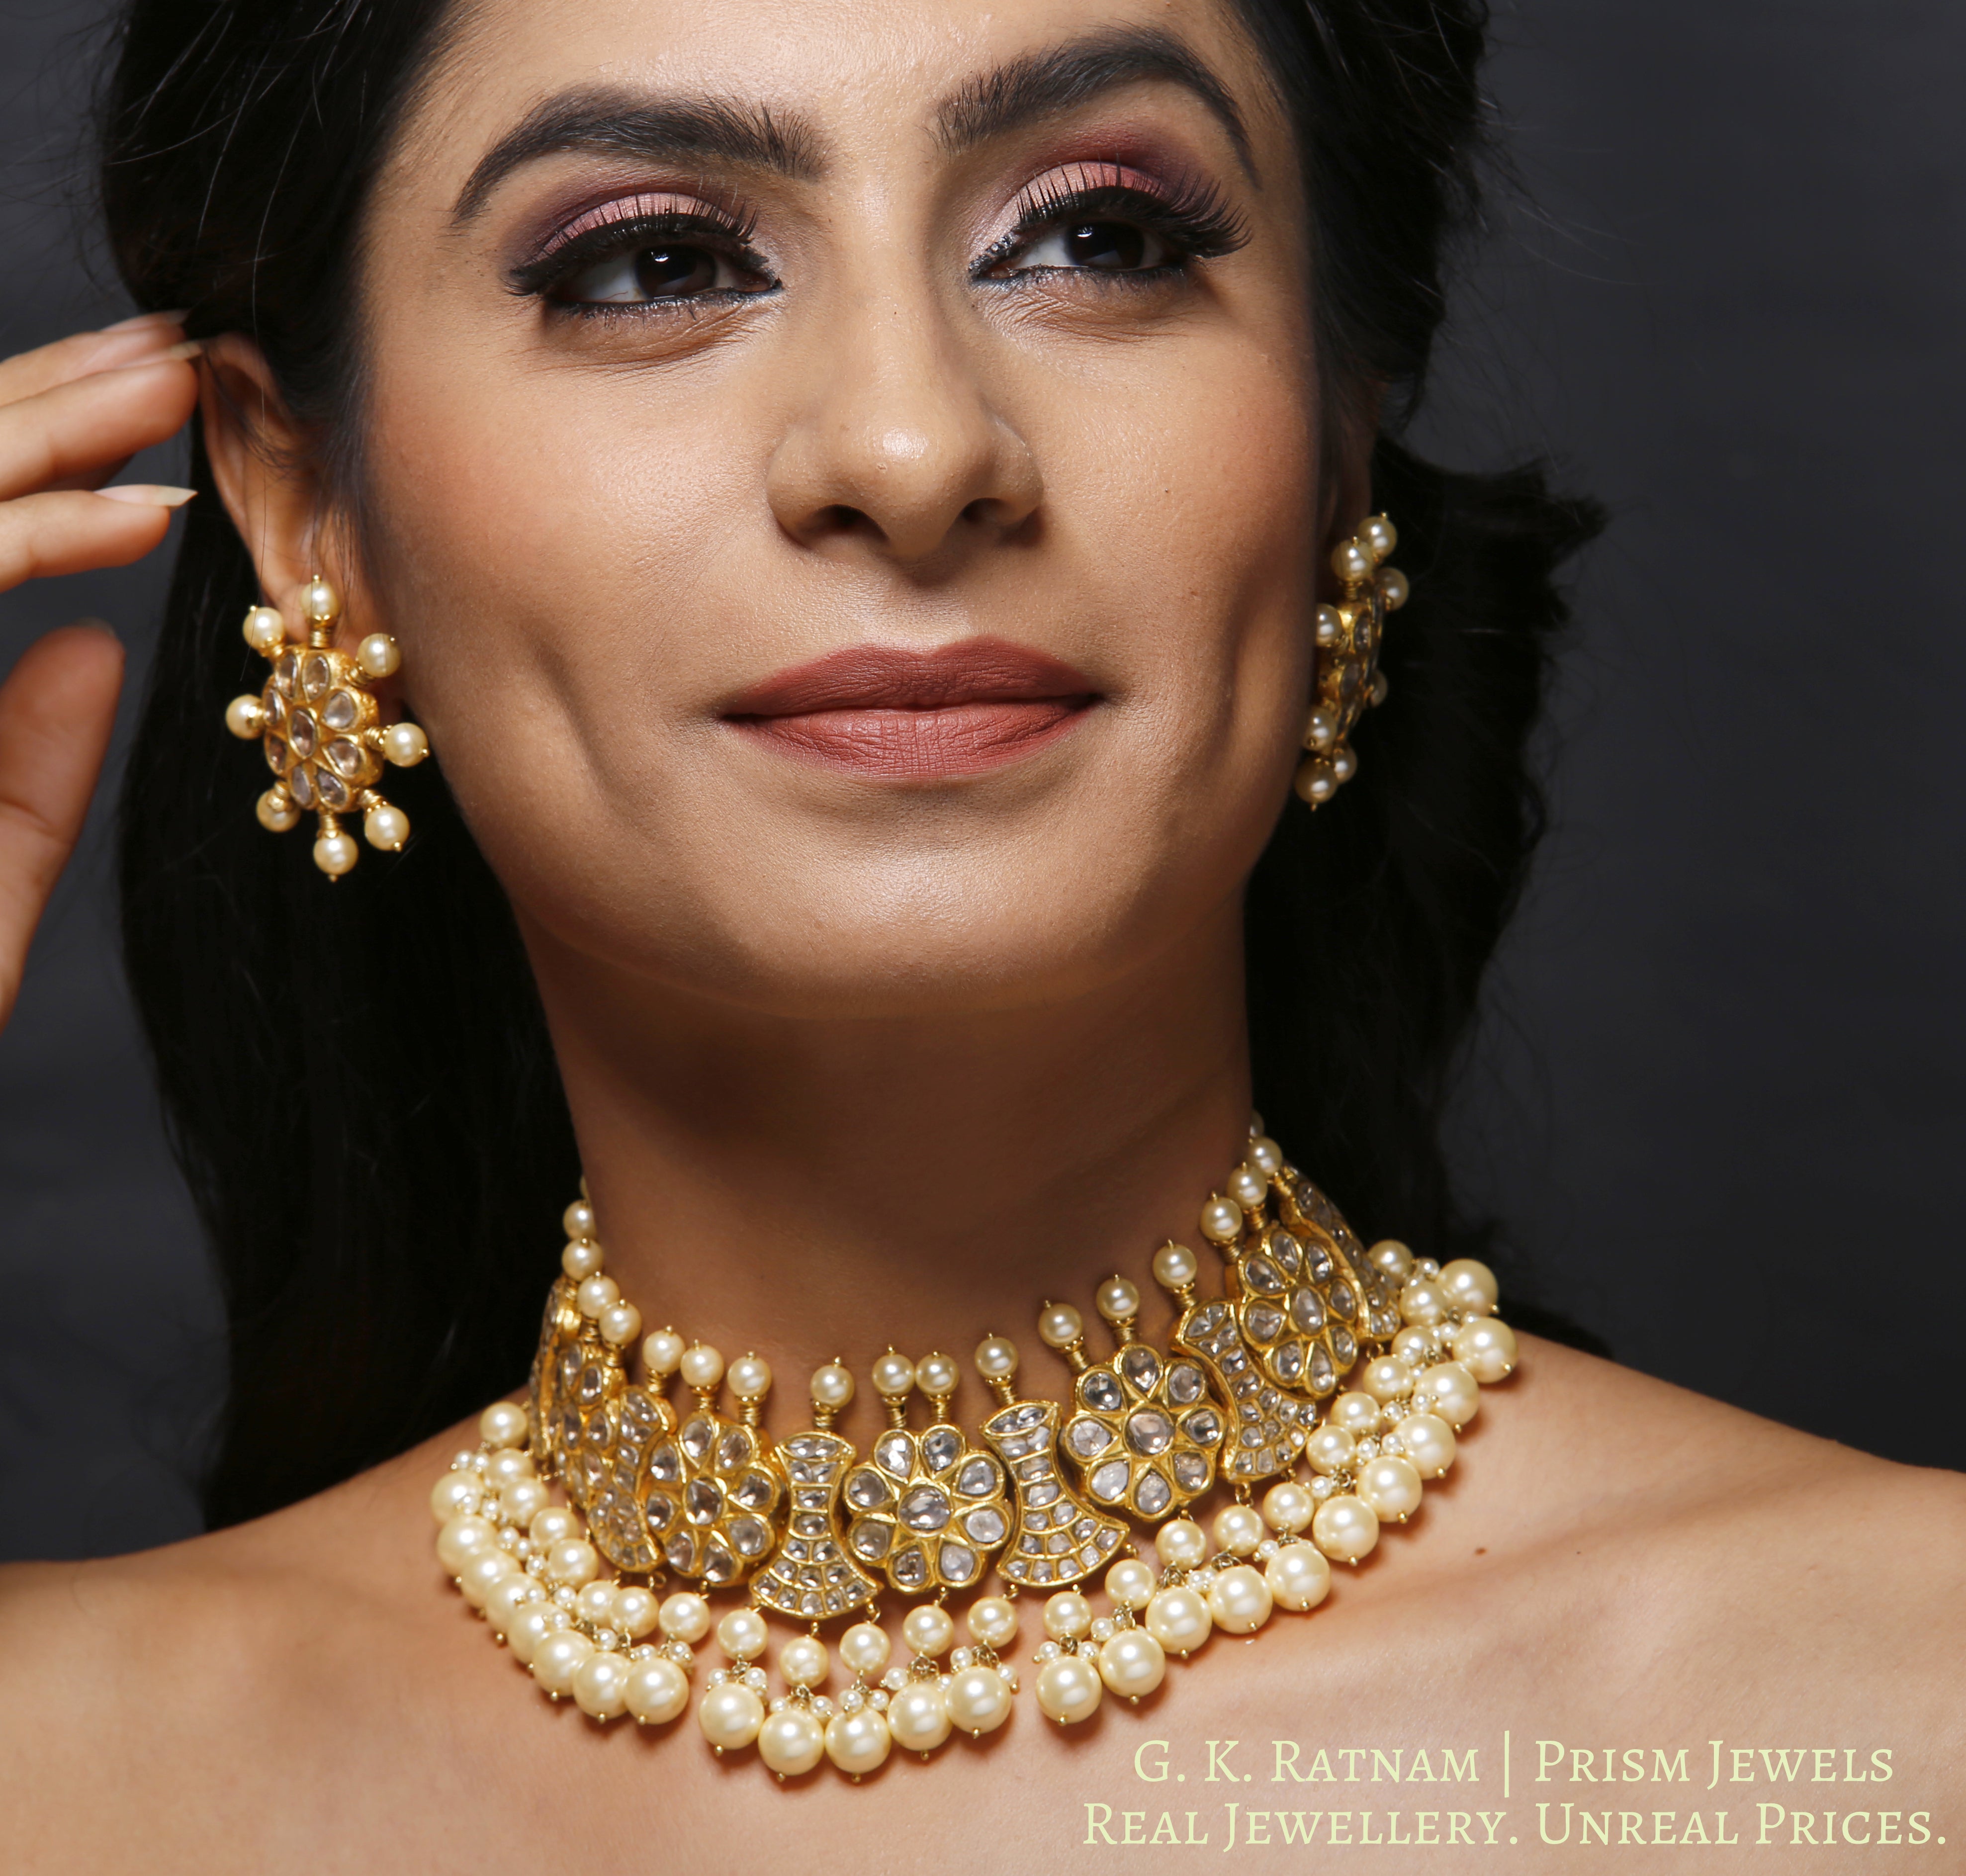 23k Gold and Diamond Polki Choker Necklace Set strung with multiple layers of lustrous pearls - gold diamond polki kundan meena jadau jewellery